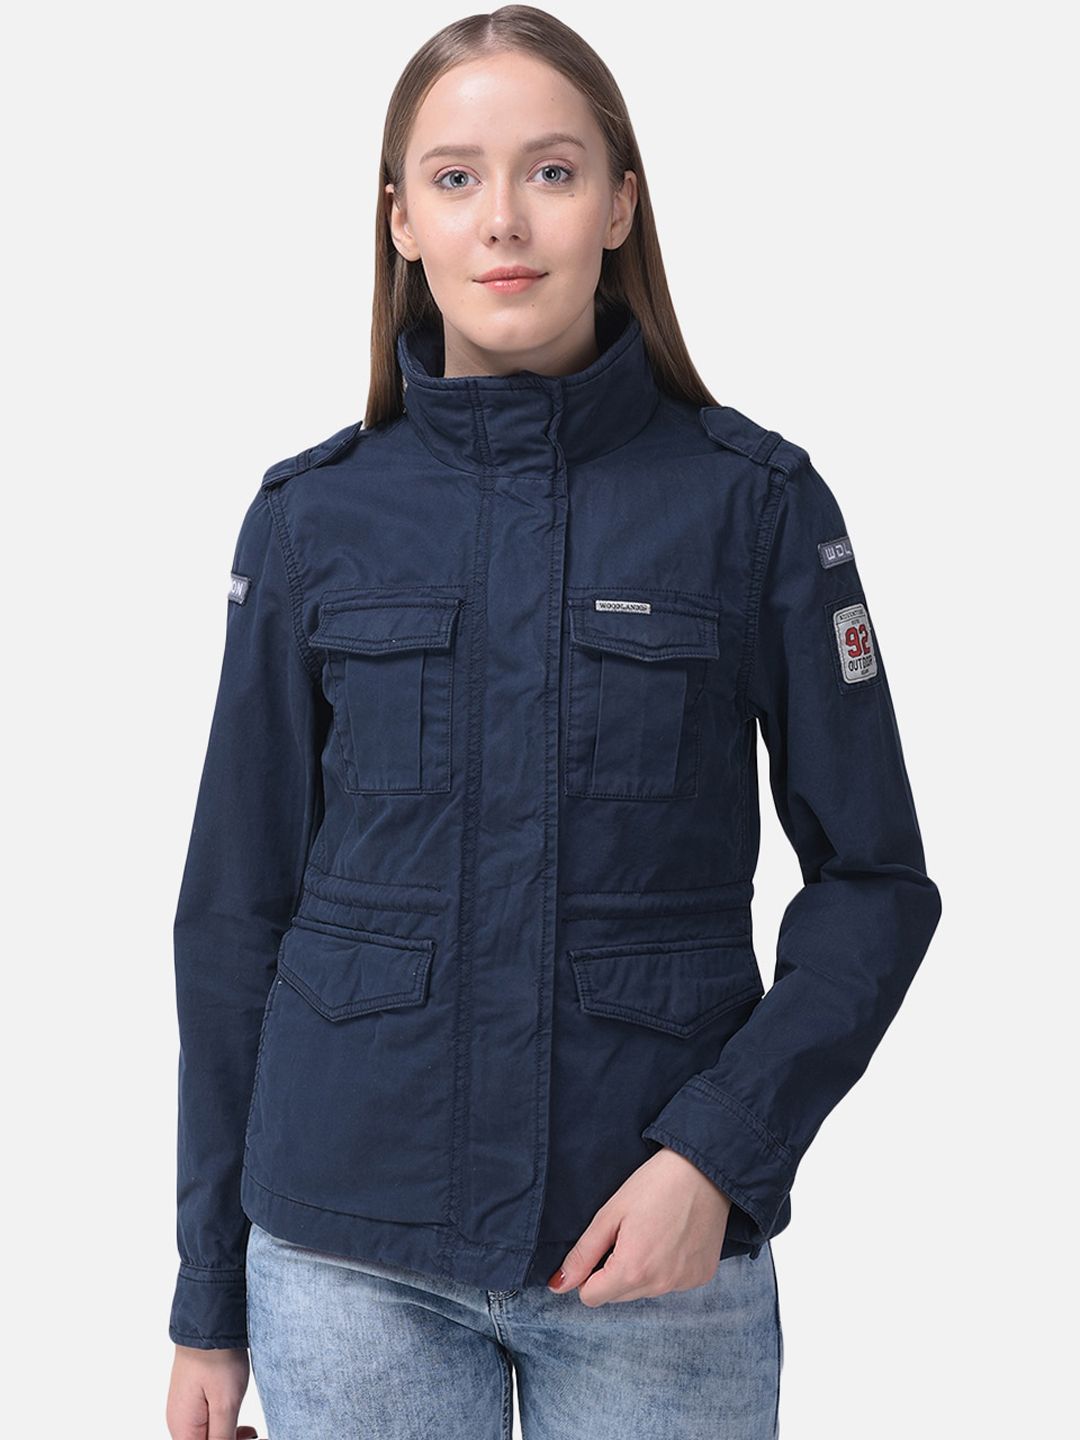 Woodland Women Navy Blue Solid Denim Jacket Price in India